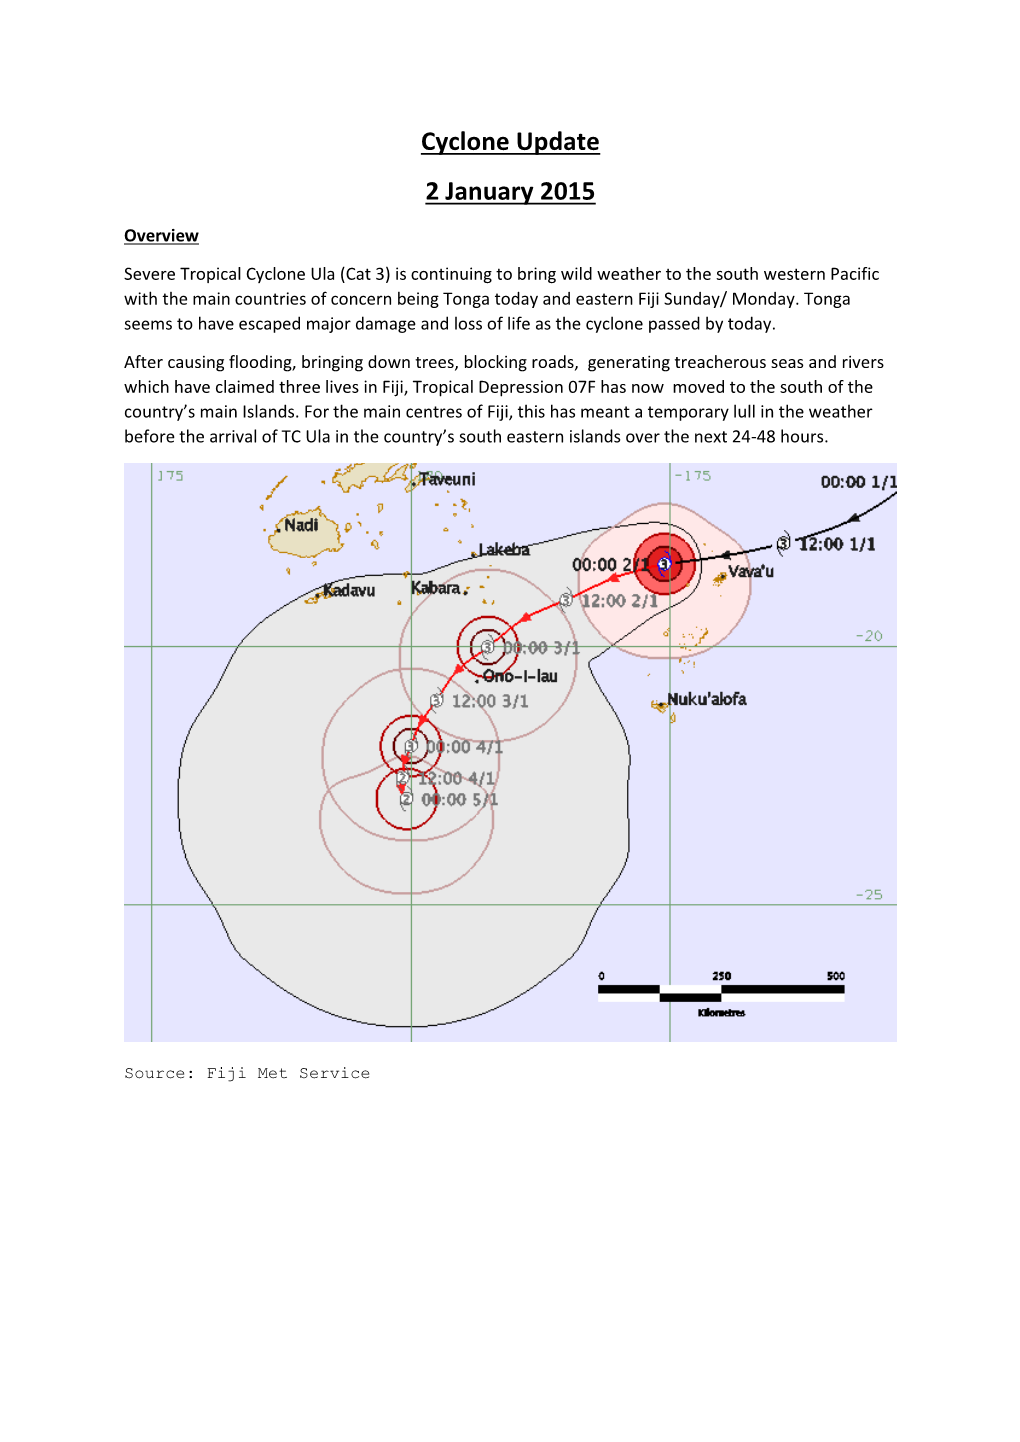 Cyclone Update 2 January 2015